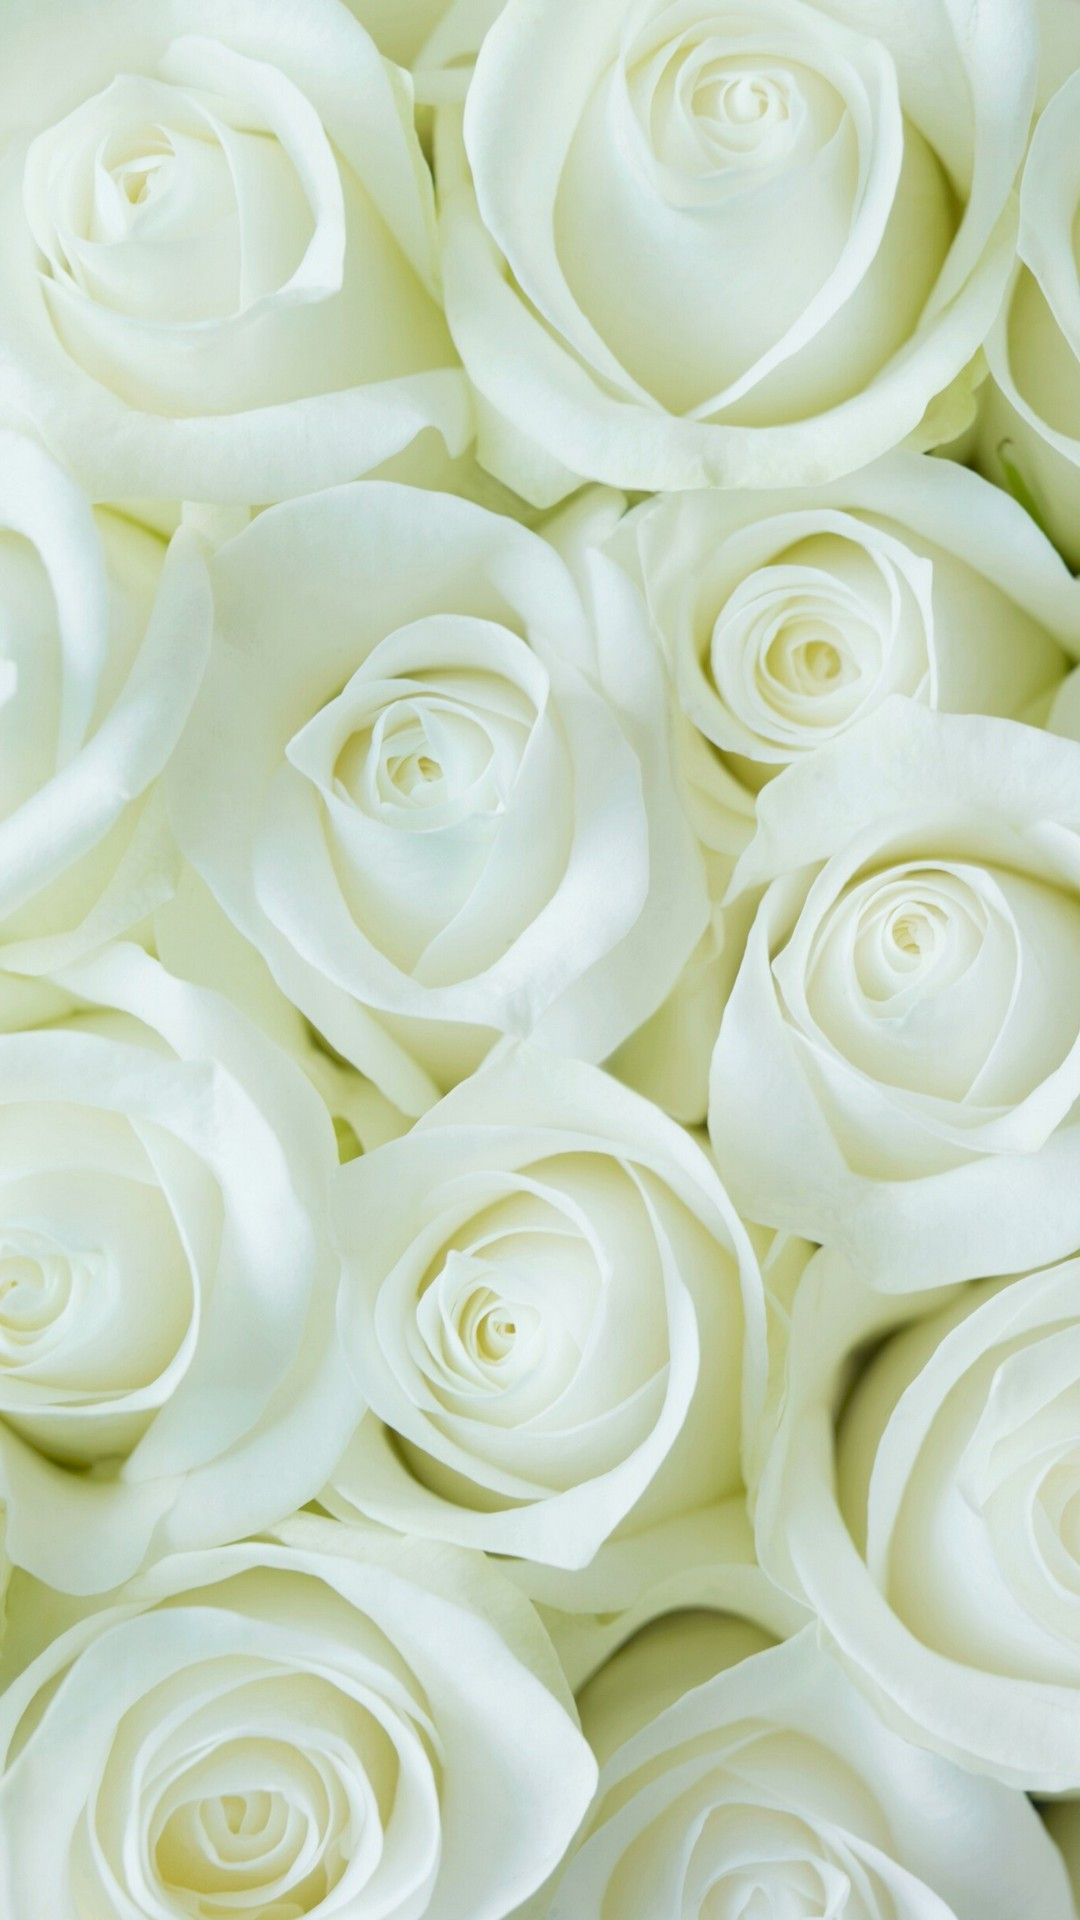 1080x1920 White Flower Wallpaper For Mobile Android | Best HD Wallpapers | Rose flower wallpaper, White roses wallpaper, Flower desktop wallpaper